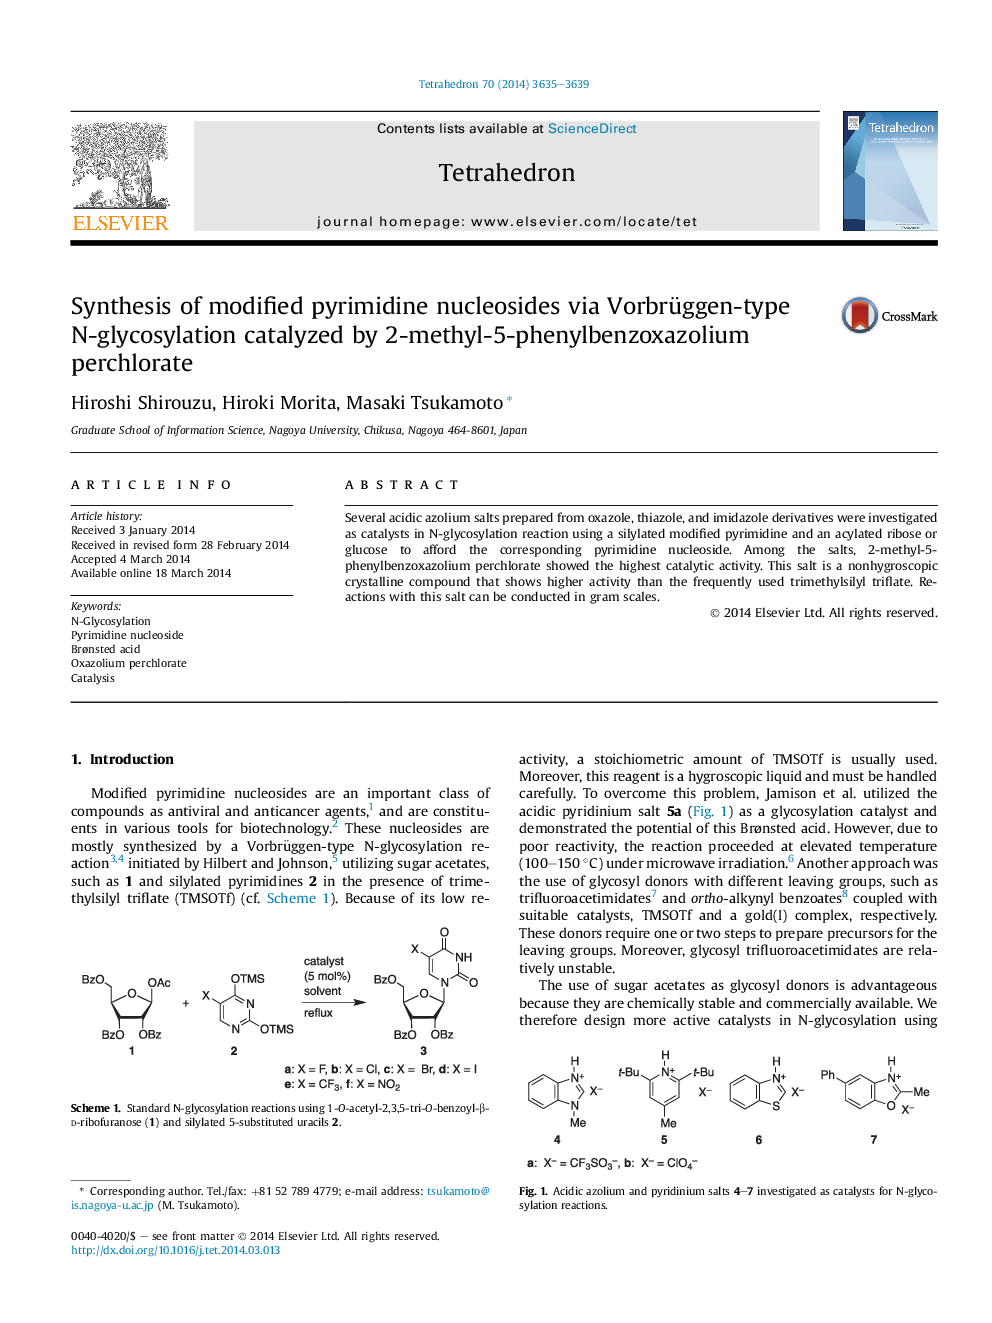 Synthesis of modified pyrimidine nucleosides via Vorbrüggen-type N-glycosylation catalyzed by 2-methyl-5-phenylbenzoxazolium perchlorate